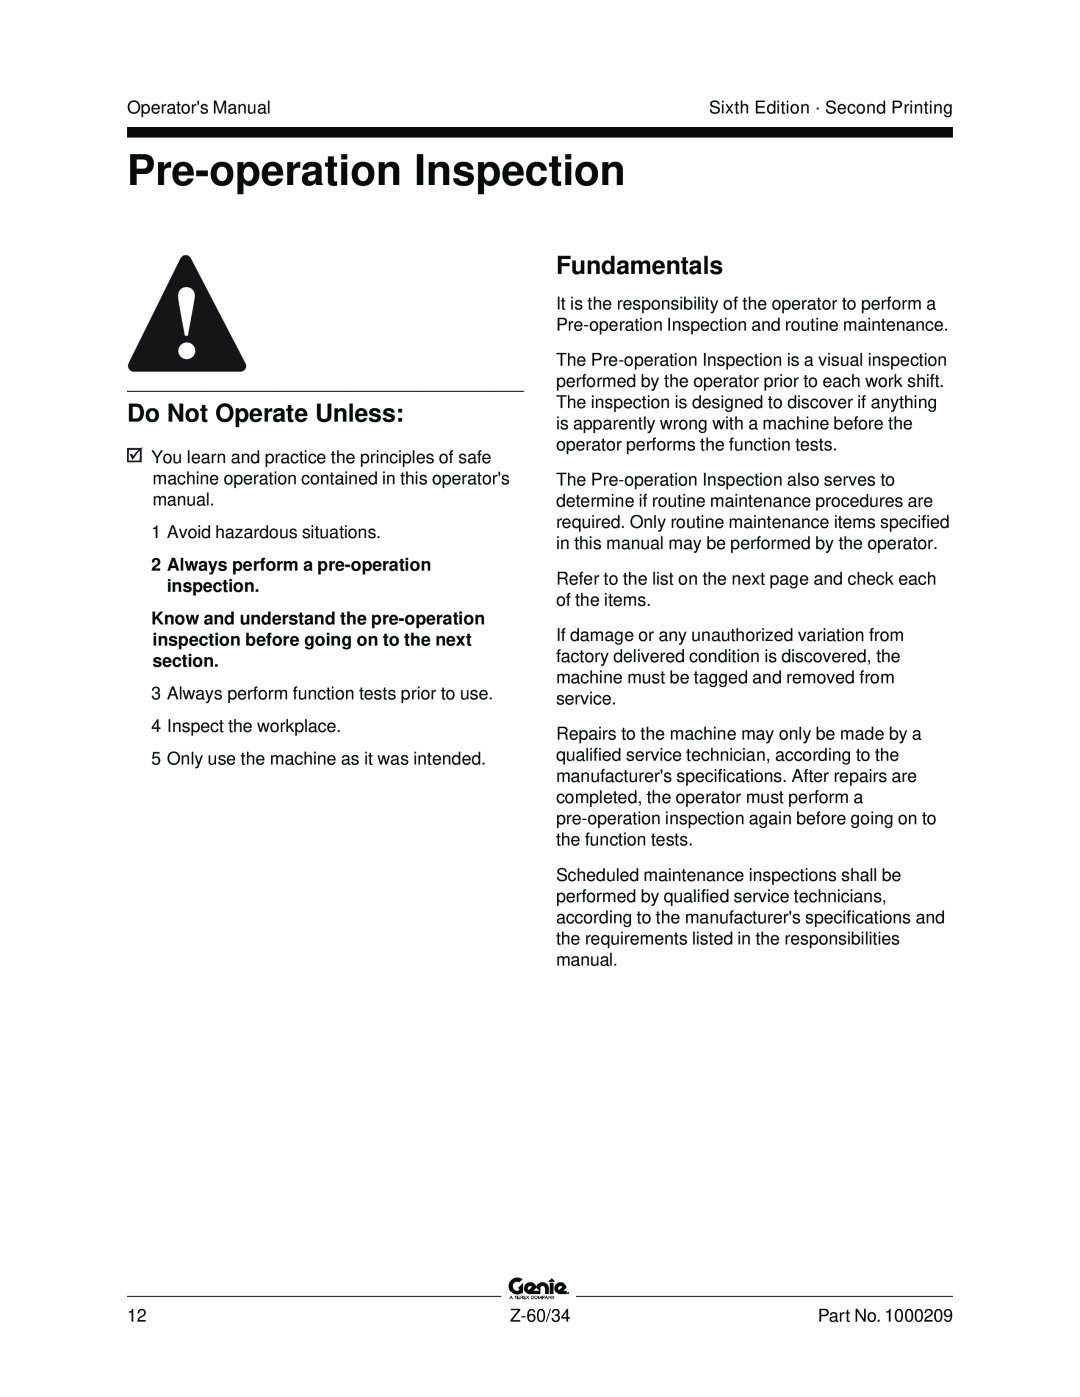 Genie Z-60, Z-34 Pre-operationInspection, Fundamentals, 2Always perform a pre-operationinspection, Do Not Operate Unless 